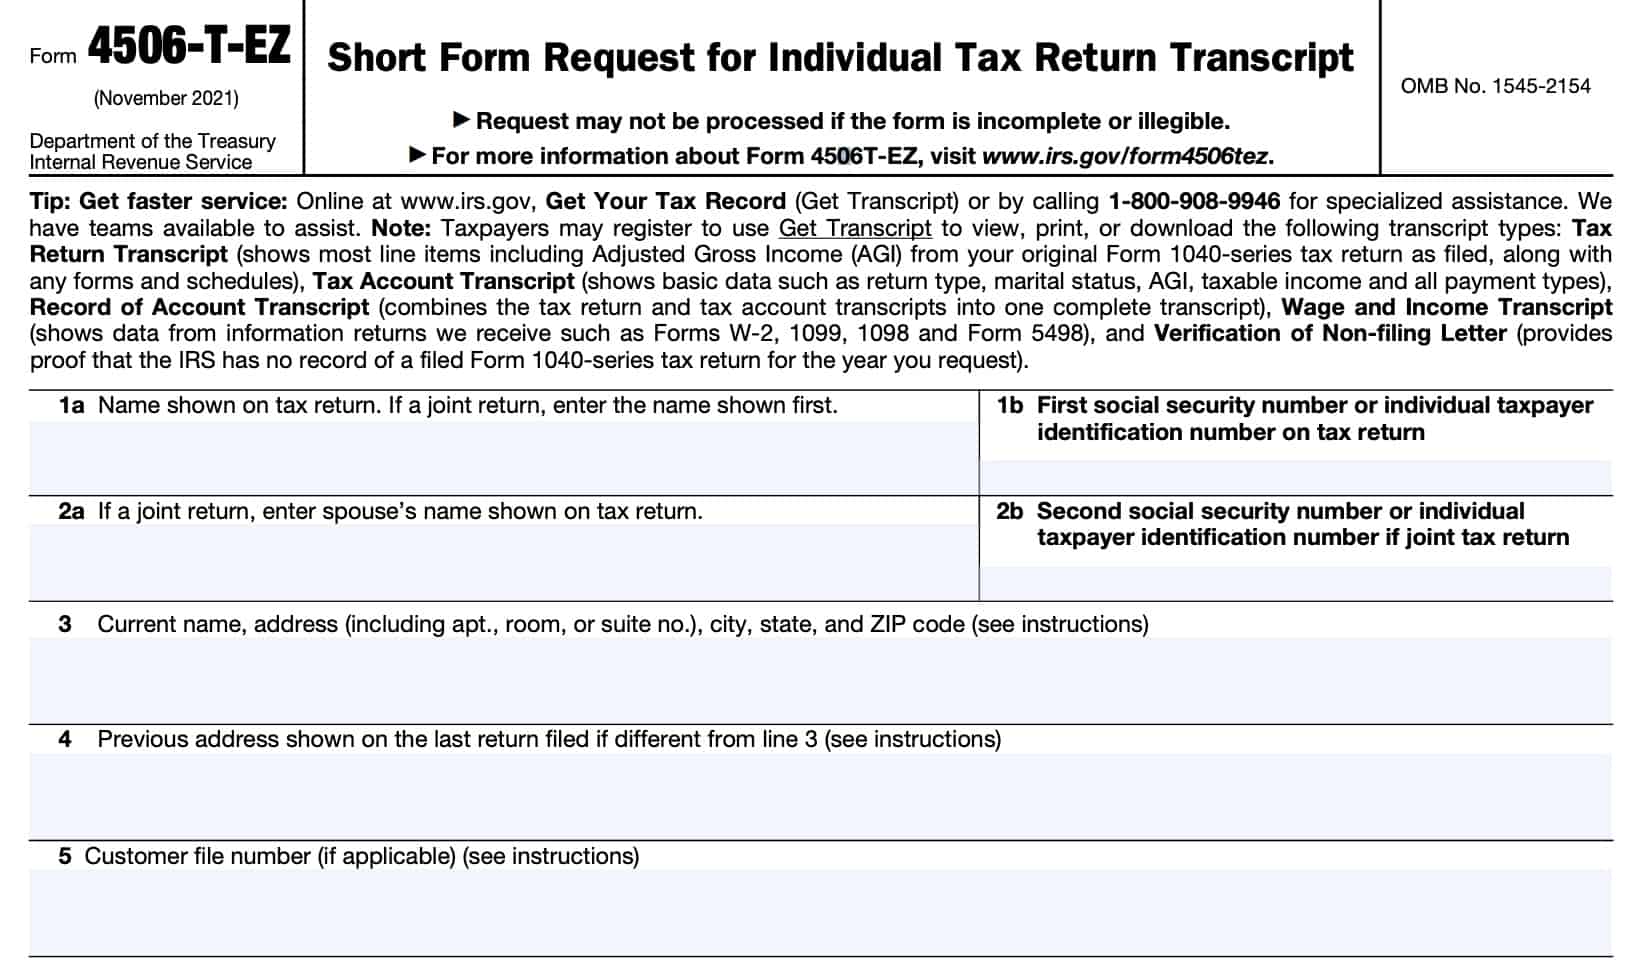 irs form 4506-t-ez, short form request for individual tax return transcript